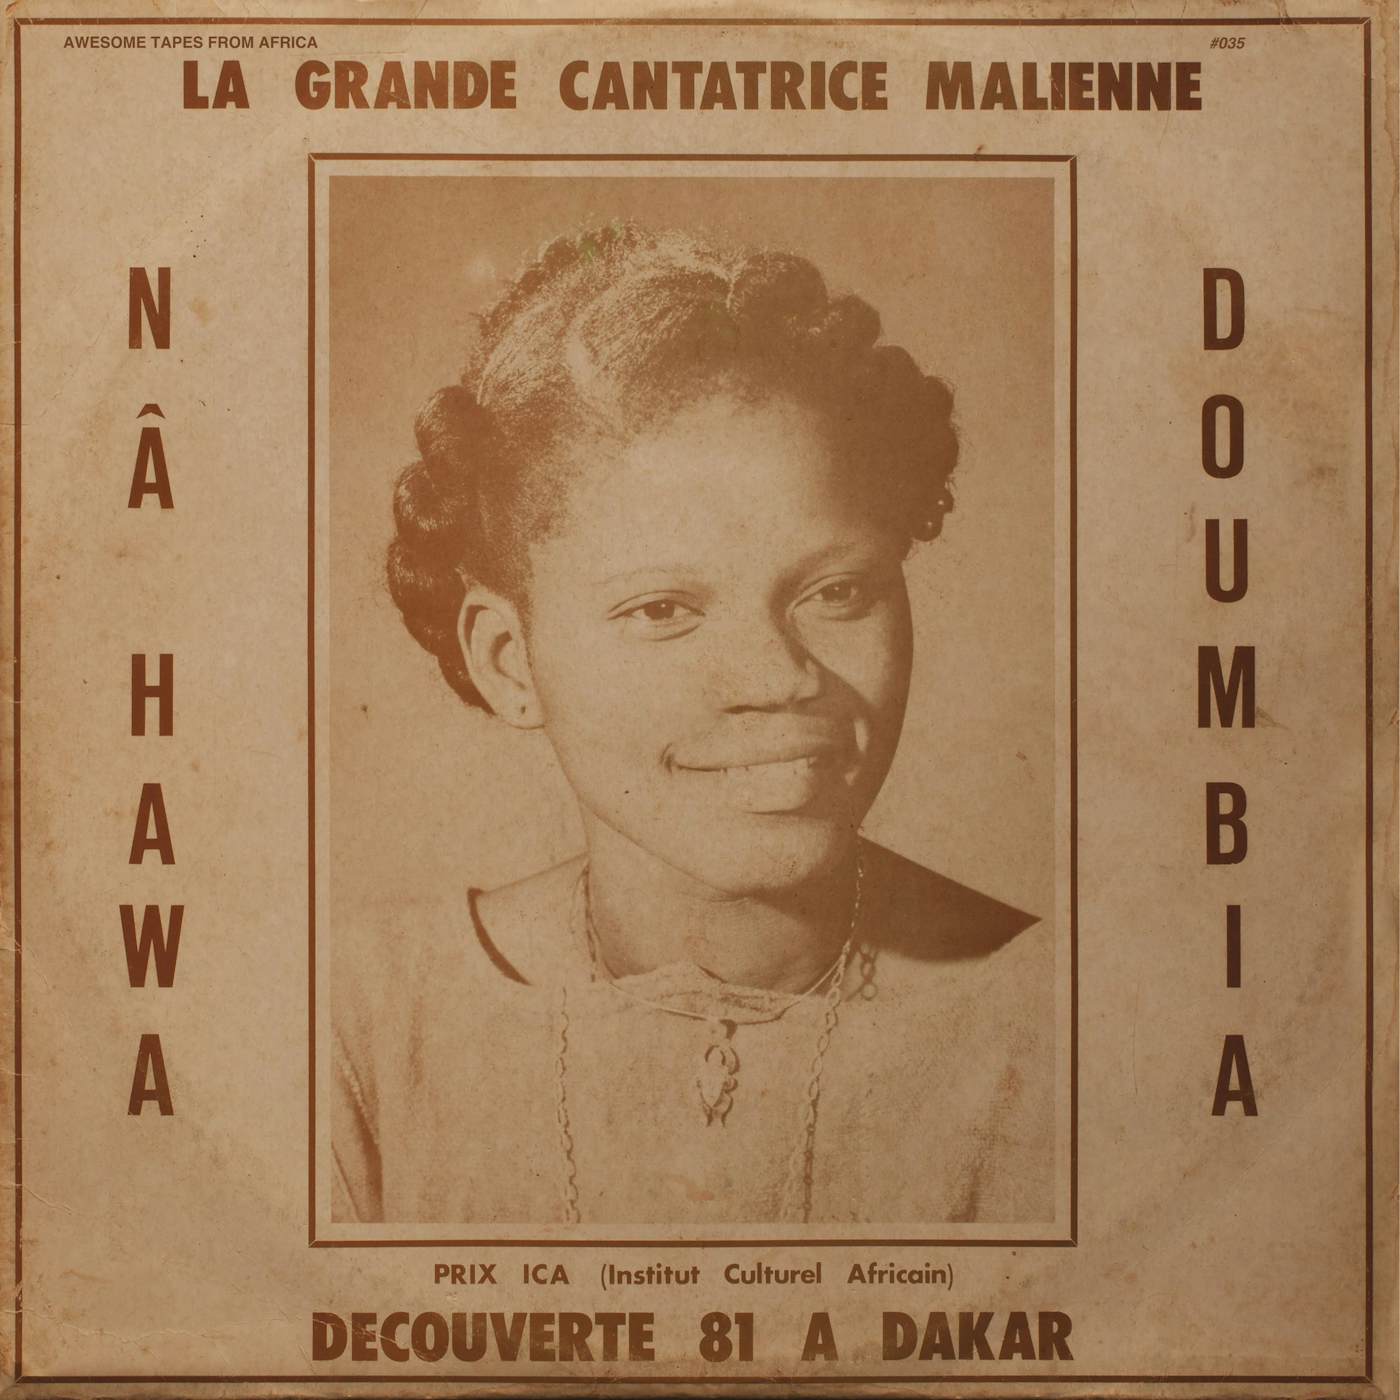 Nahawa Doumbia LA GRANDE CANTATRICE MALIENNE VOL. 1 CD